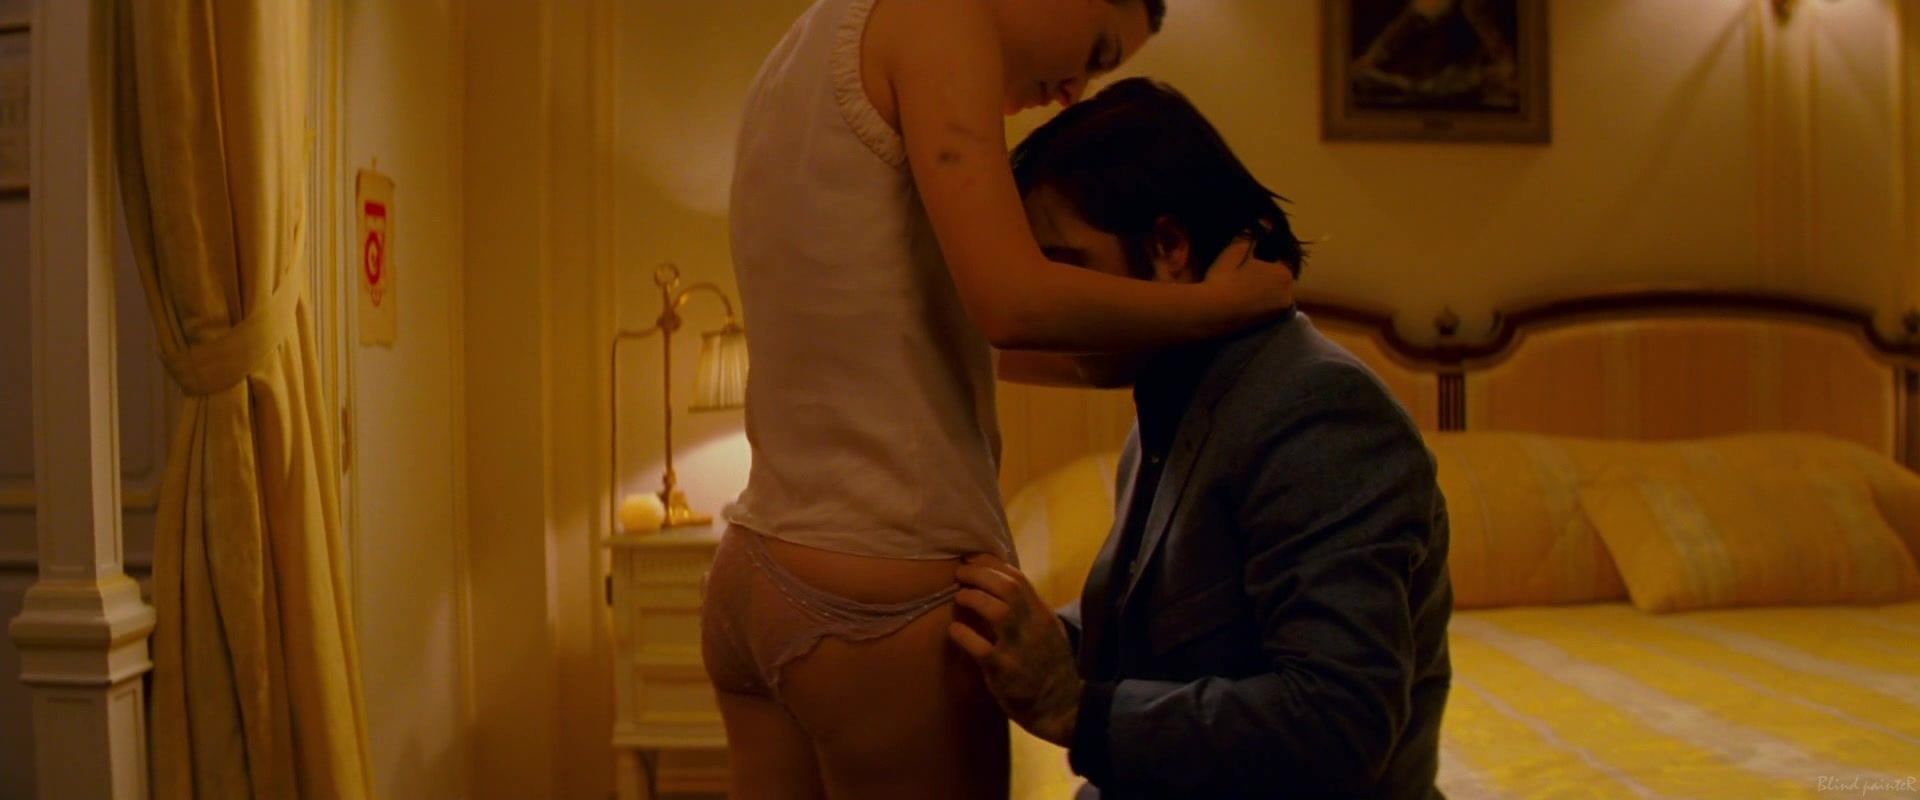 Facials Sex video Natalie Portman nude - Hotel Chevalier (2007) Dani Daniels